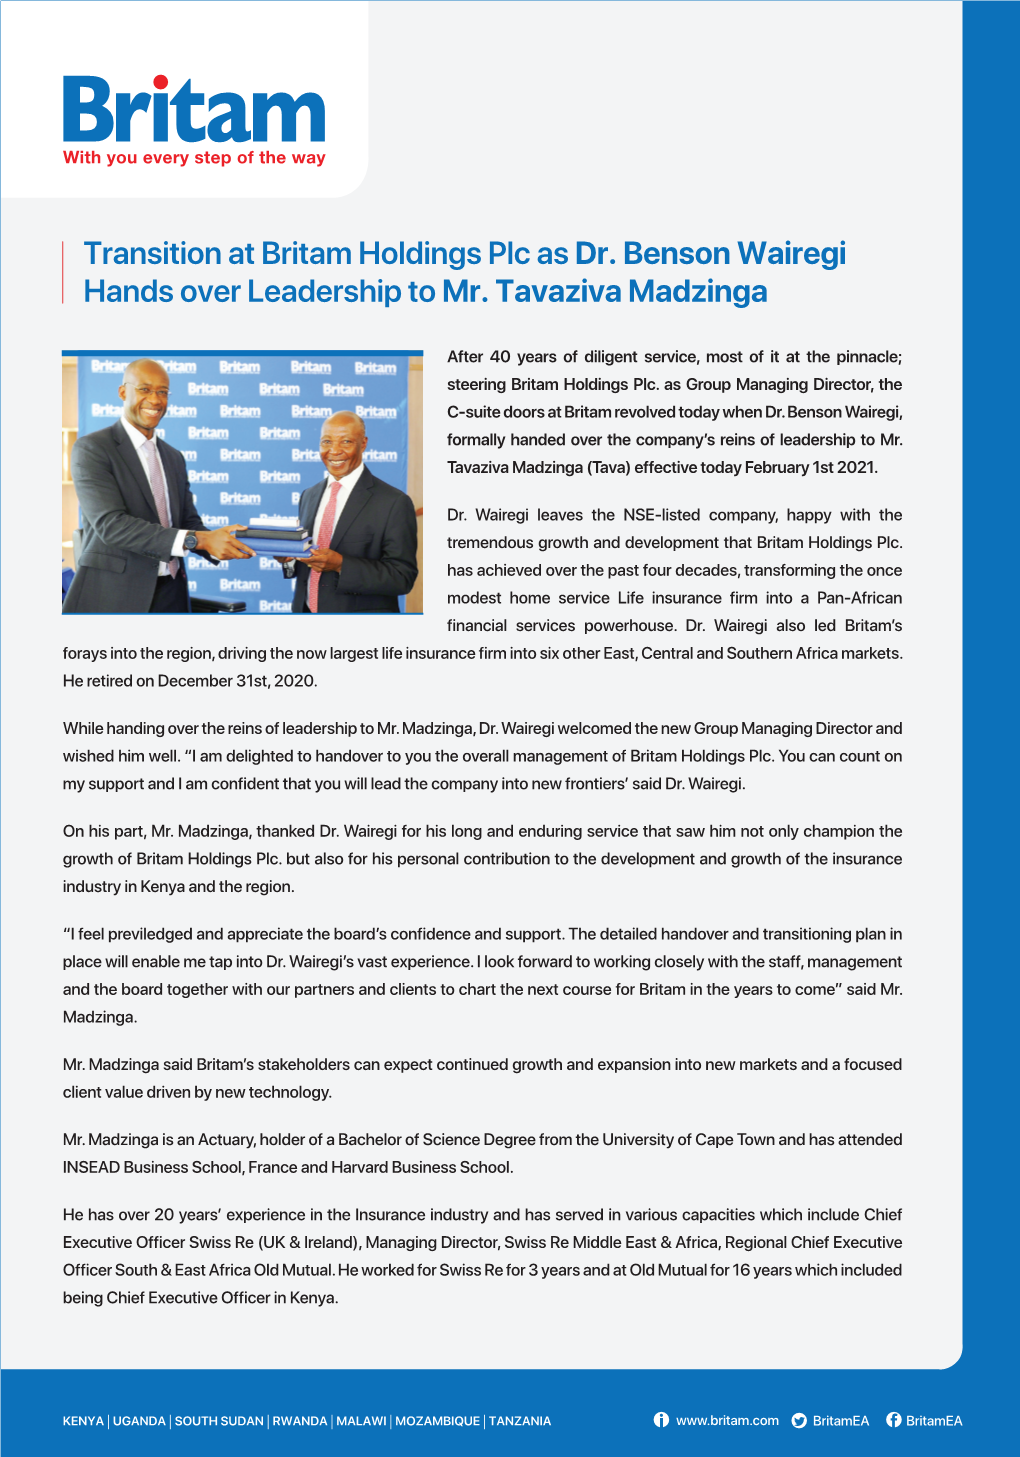 Transition at Britam Holdings Plc As Dr. Benson Wairegi Hands Over Leadership to Mr. Tavaziva Madzinga